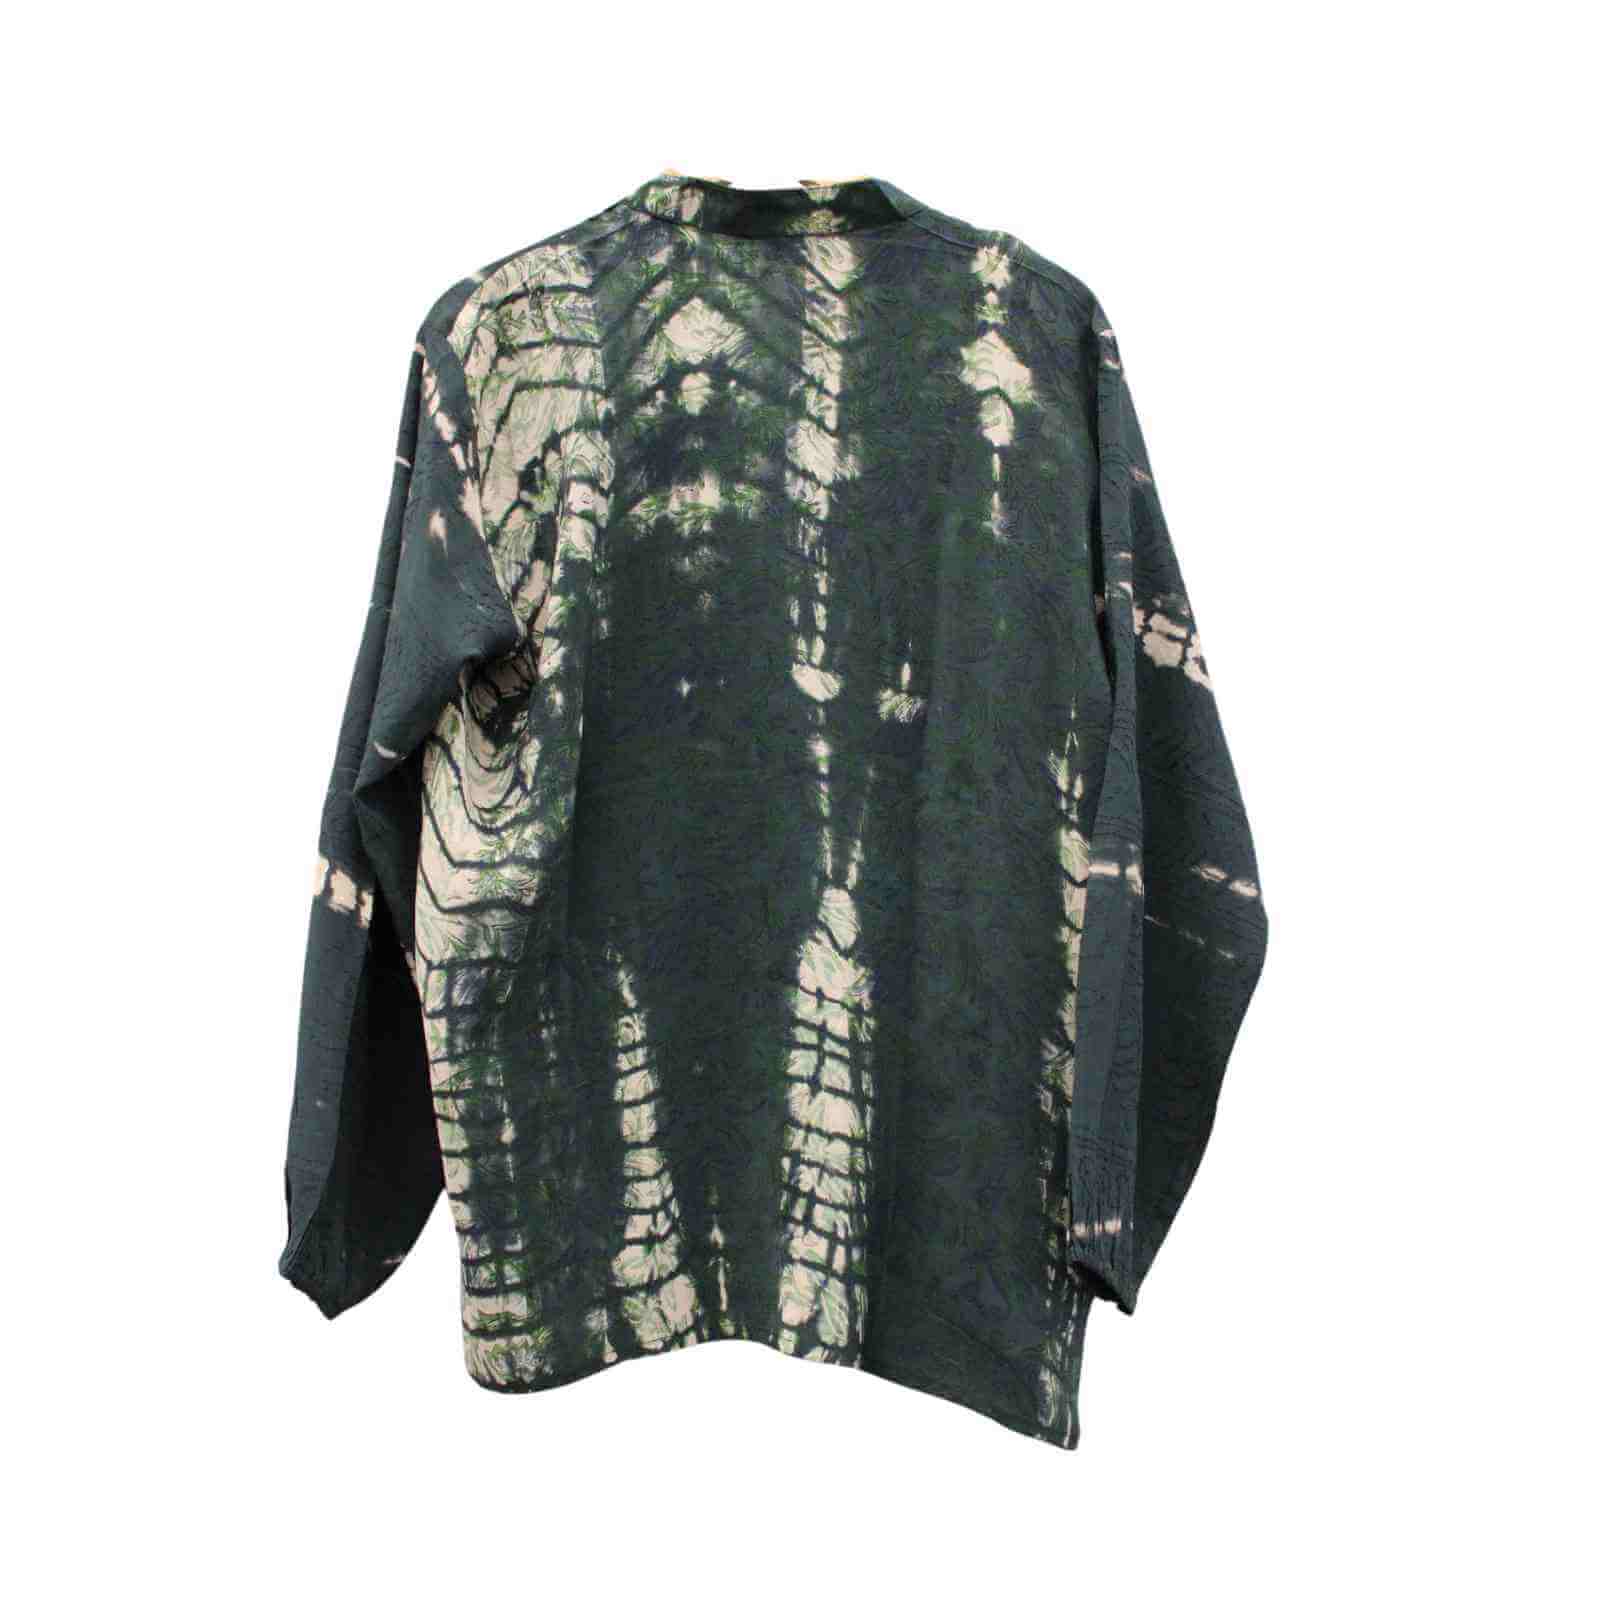 Sort batik silkeskjorte bagfra fra Cofur hos Anbi